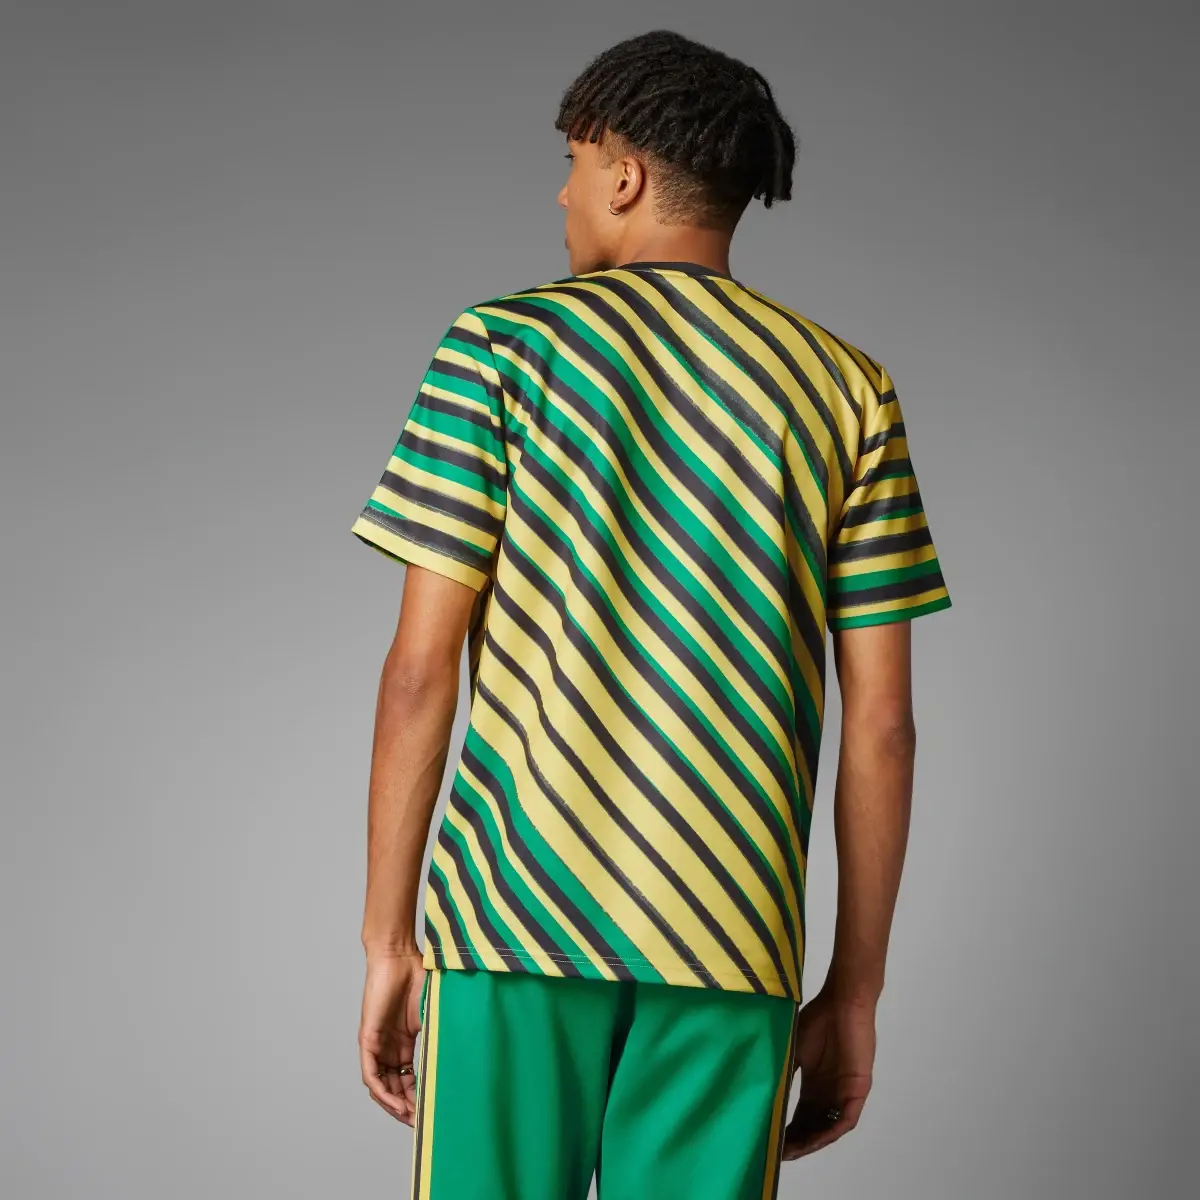 Adidas Jamaica Trefoil Jersey. 2